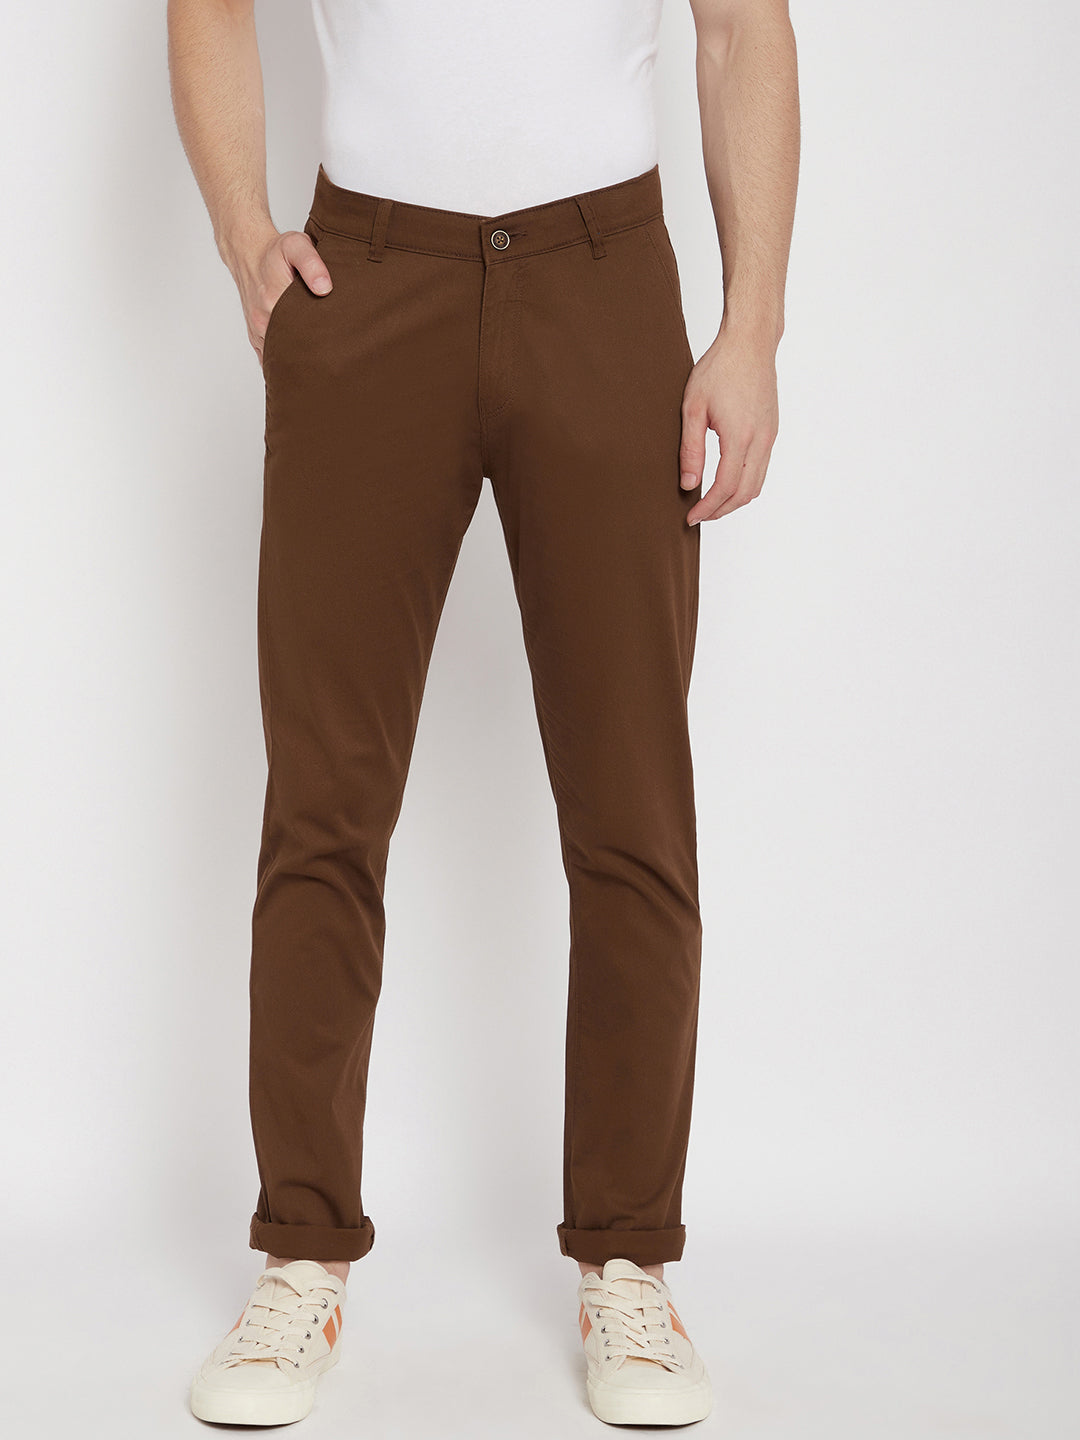 Brown Printed Slim Fit Trousers - Men Trousers